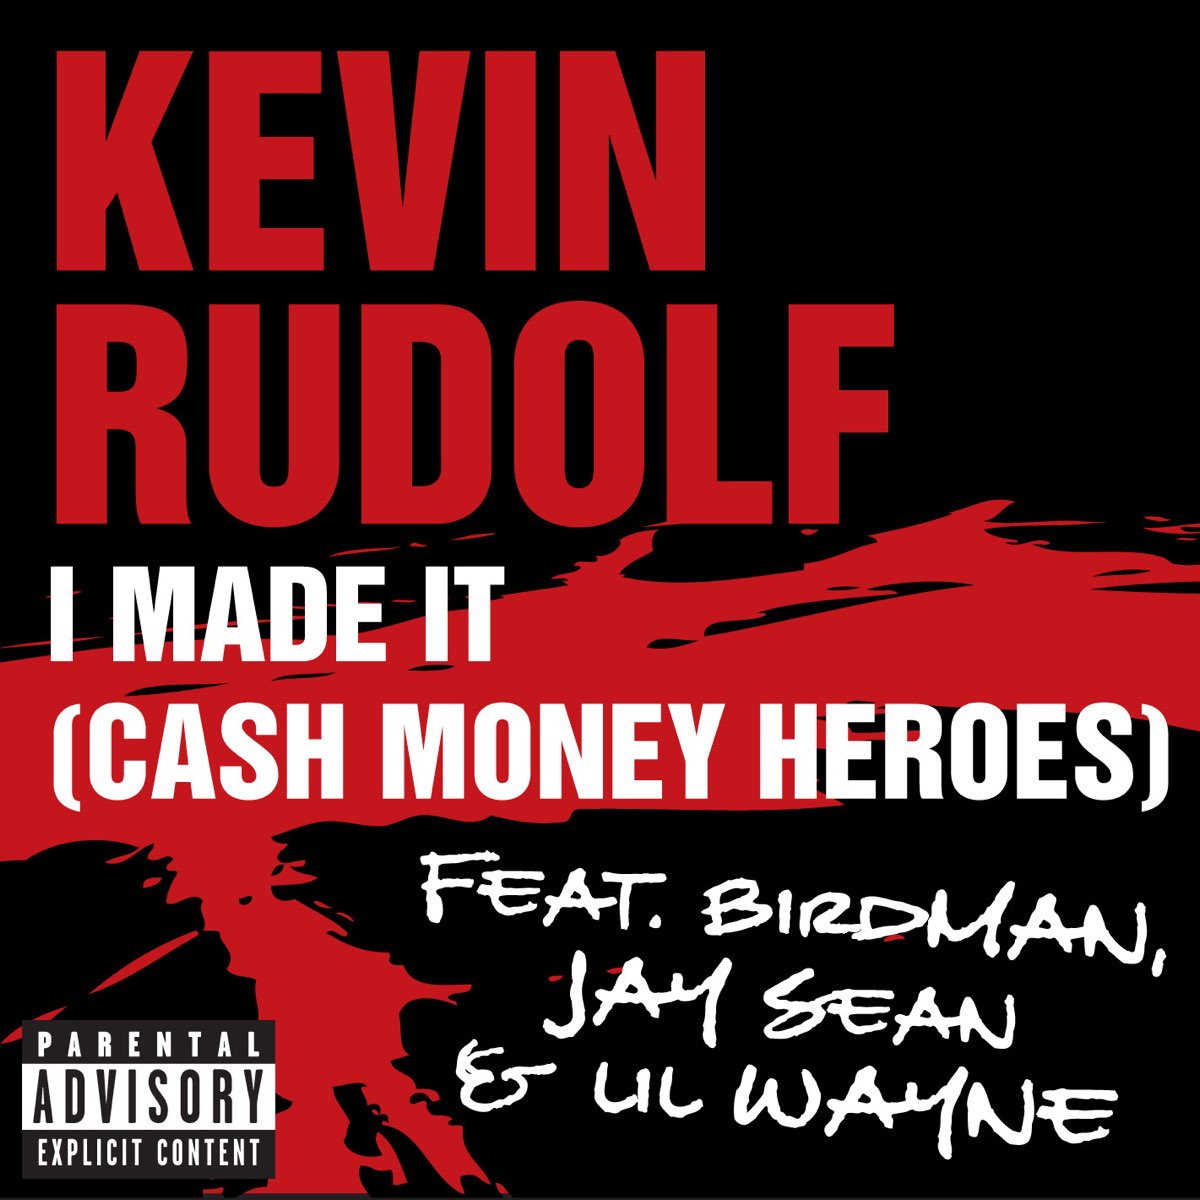 Kevin Rudolf featuring Lil Wayne, Jay Sean, & Birdman — I Made It (Cash Money Heroes) cover artwork